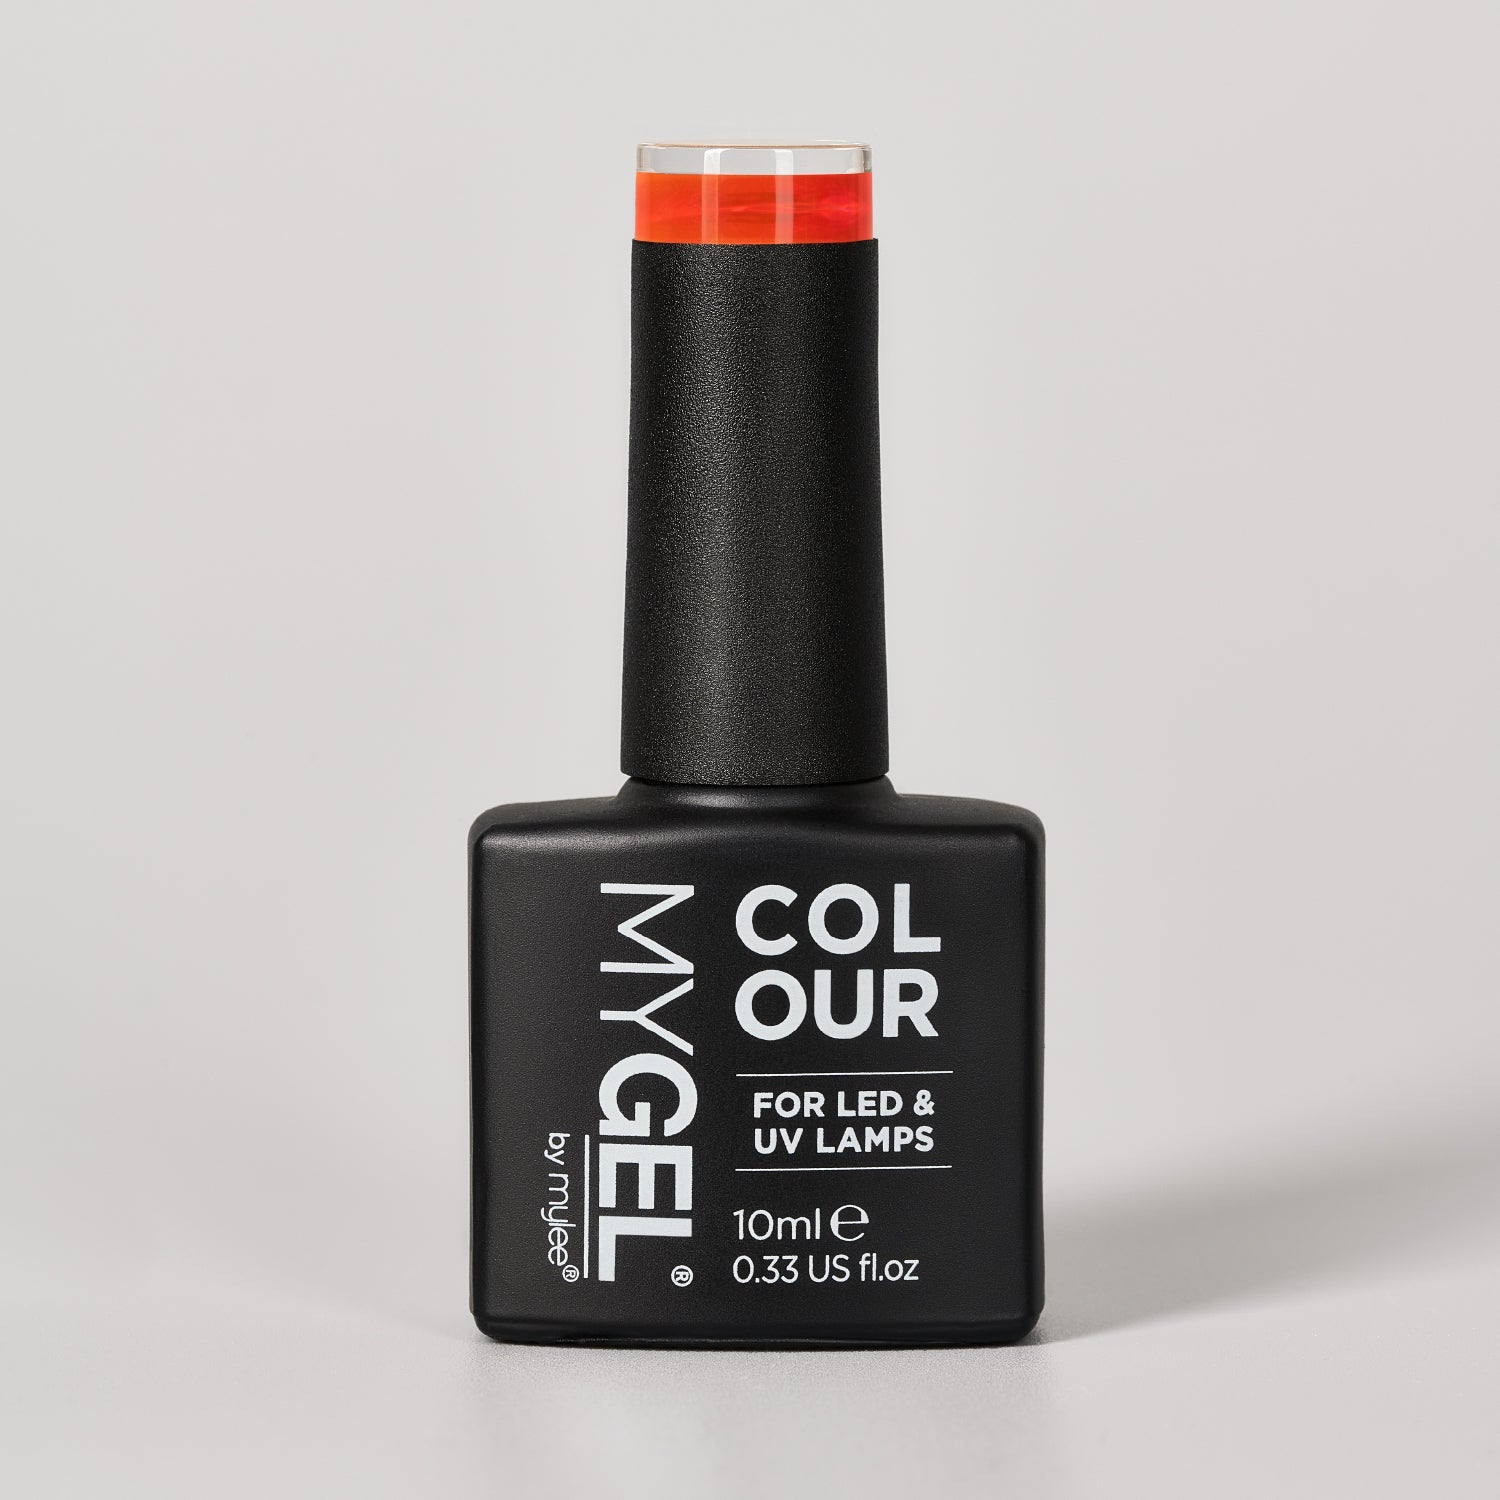 Mylee New Flame LED/UV Orange Gel Nail Polish 10ml – Long Lasting At Home Manicure/Pedicure, High Gloss And Chip Free Wear Nail Varnish